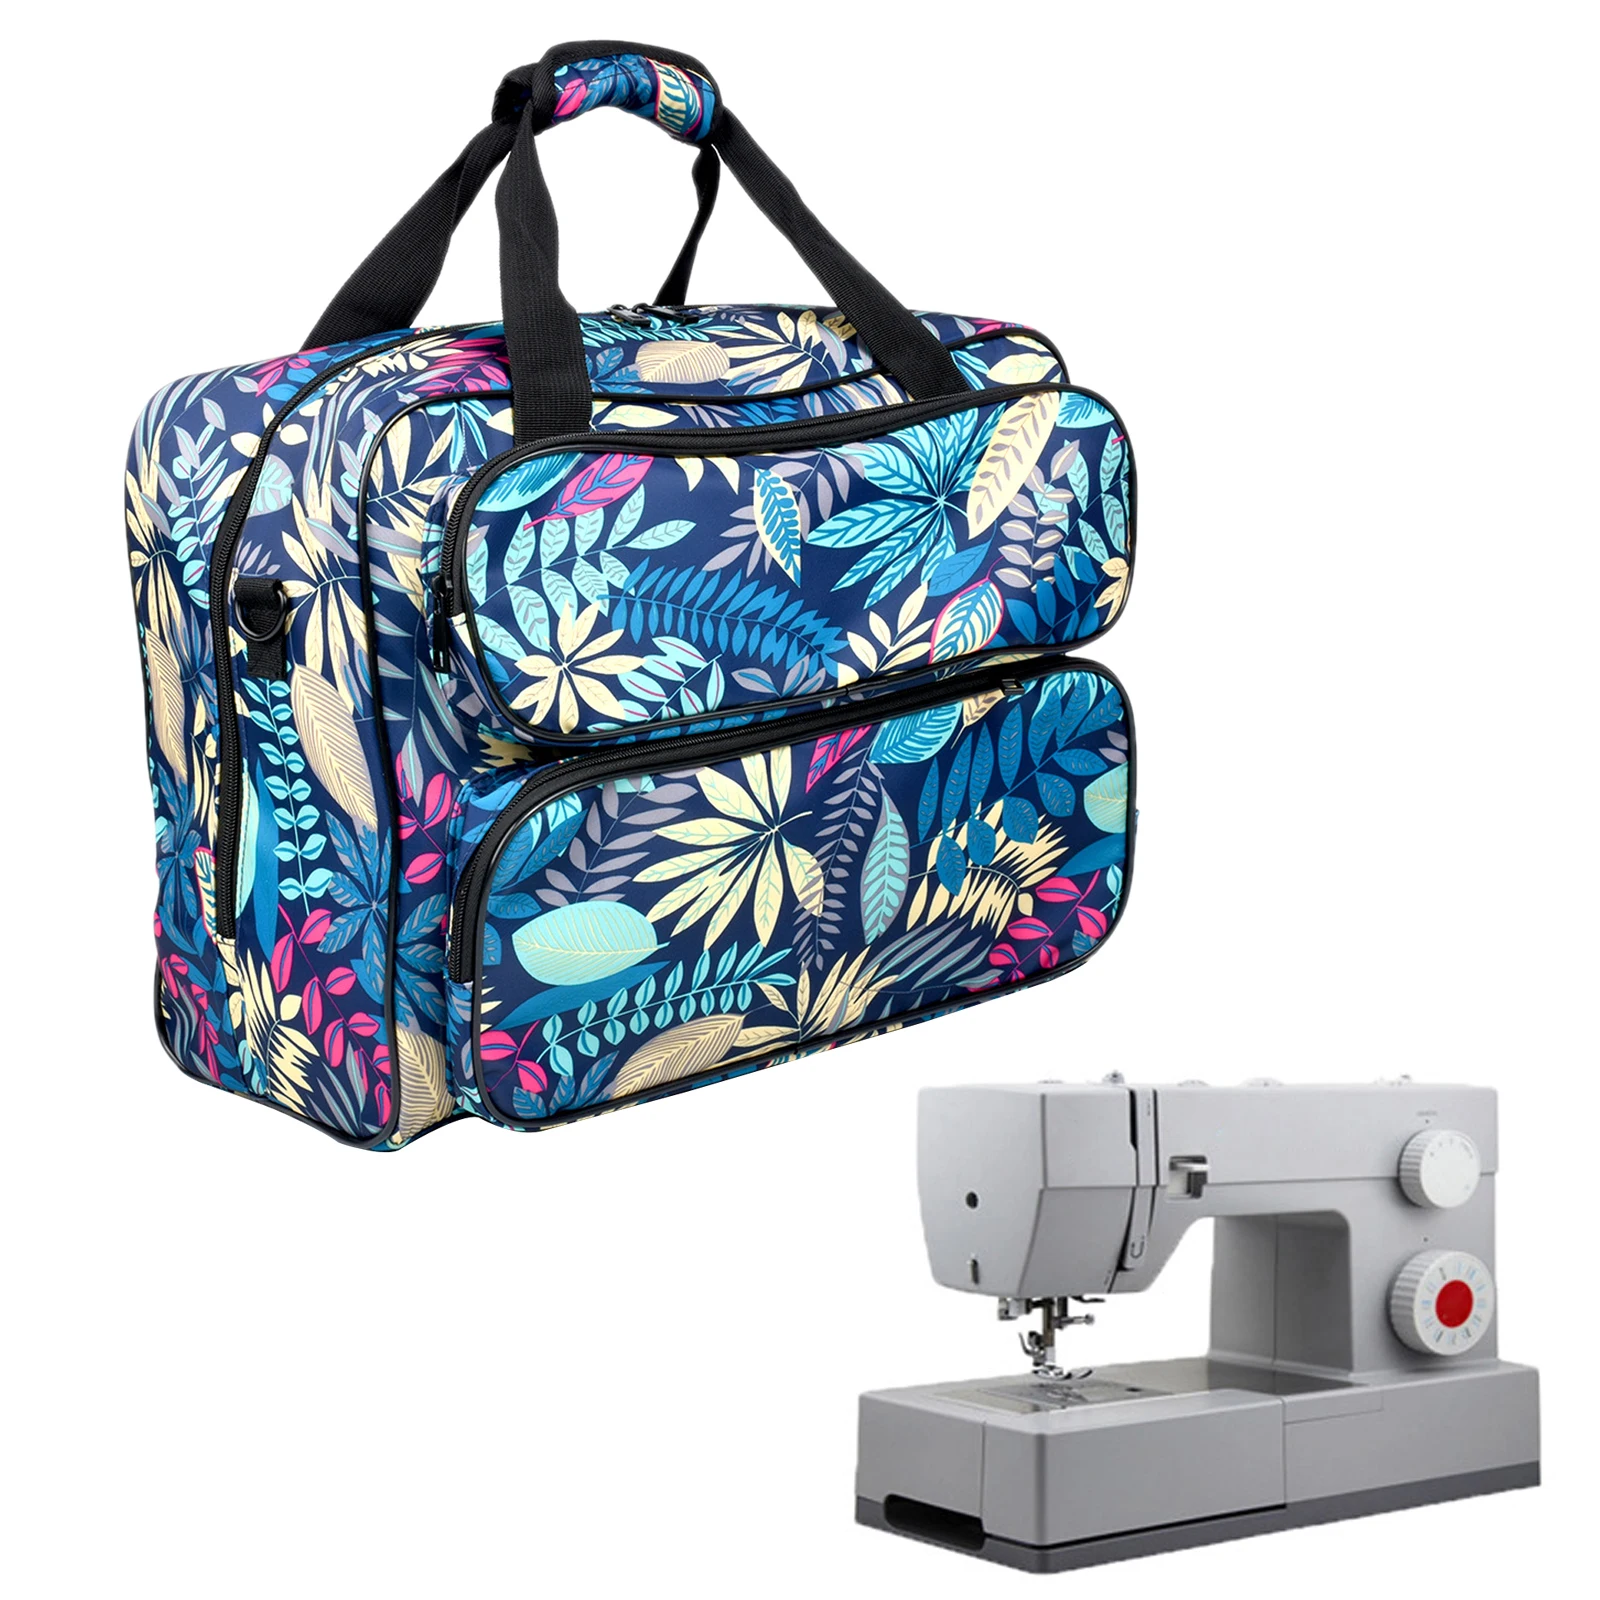 Sewing Machine Storage Bag Large Capacity Knitting Organization Sewing Kits Tools Accessories Thread Yarn Storage Bag